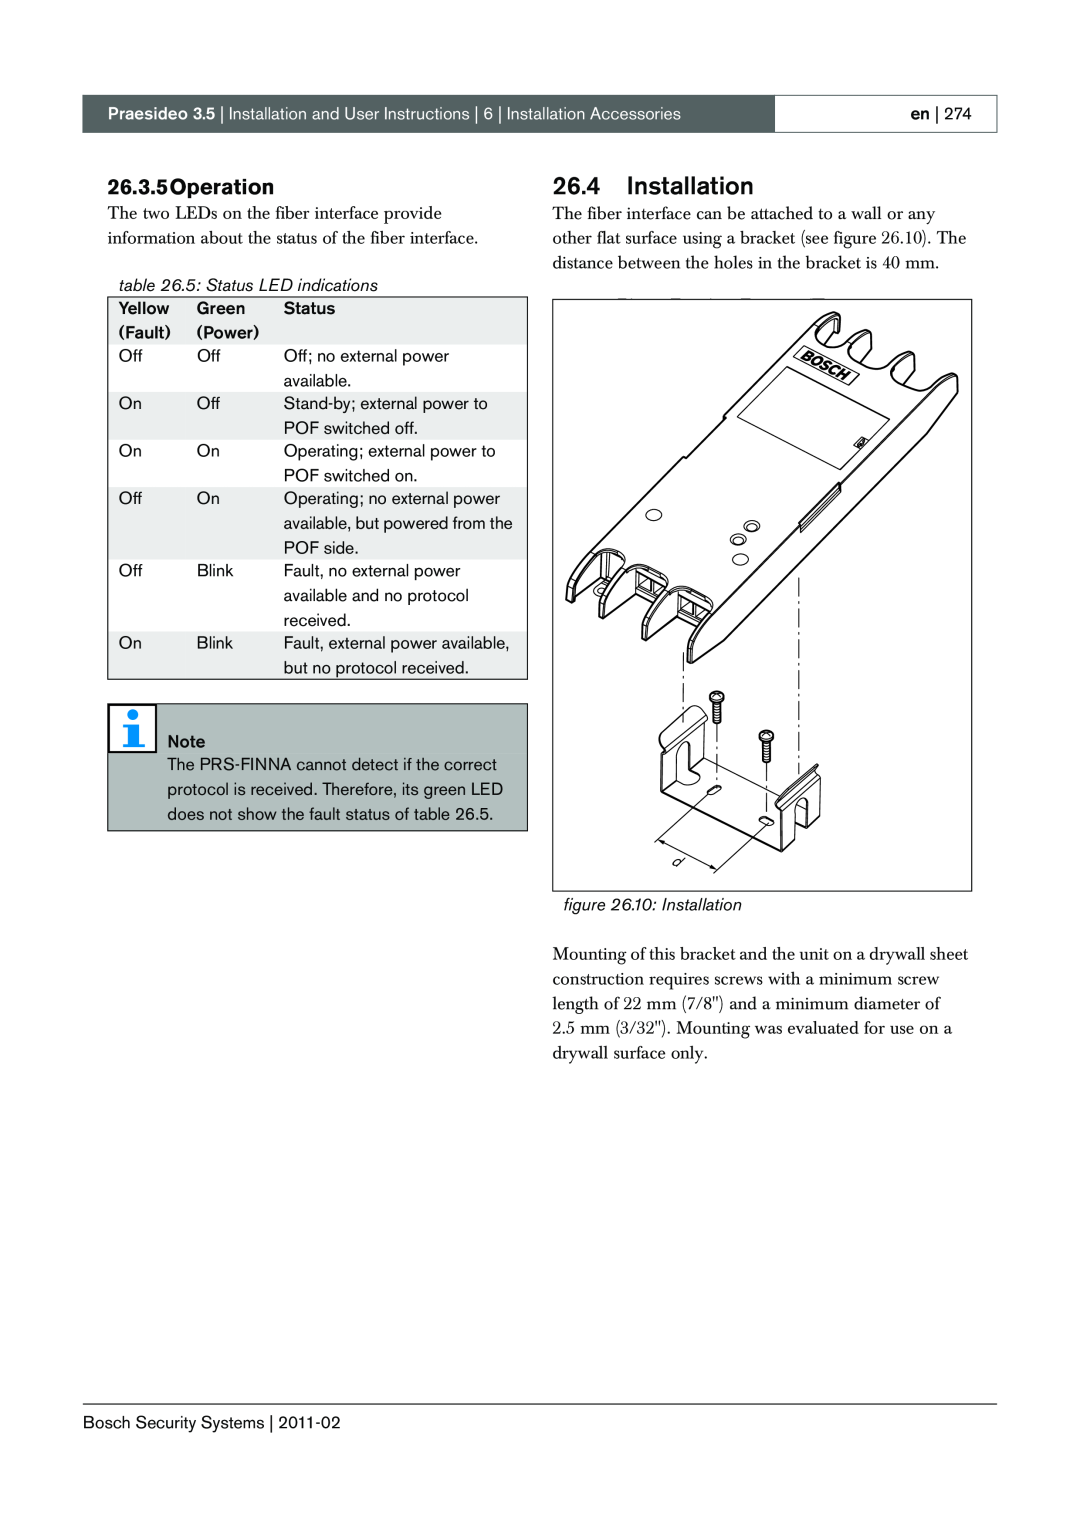 Bosch Appliances manual 26.4Installation, 26.3.5Operation, 5 Status LED indications, 10: Installation 